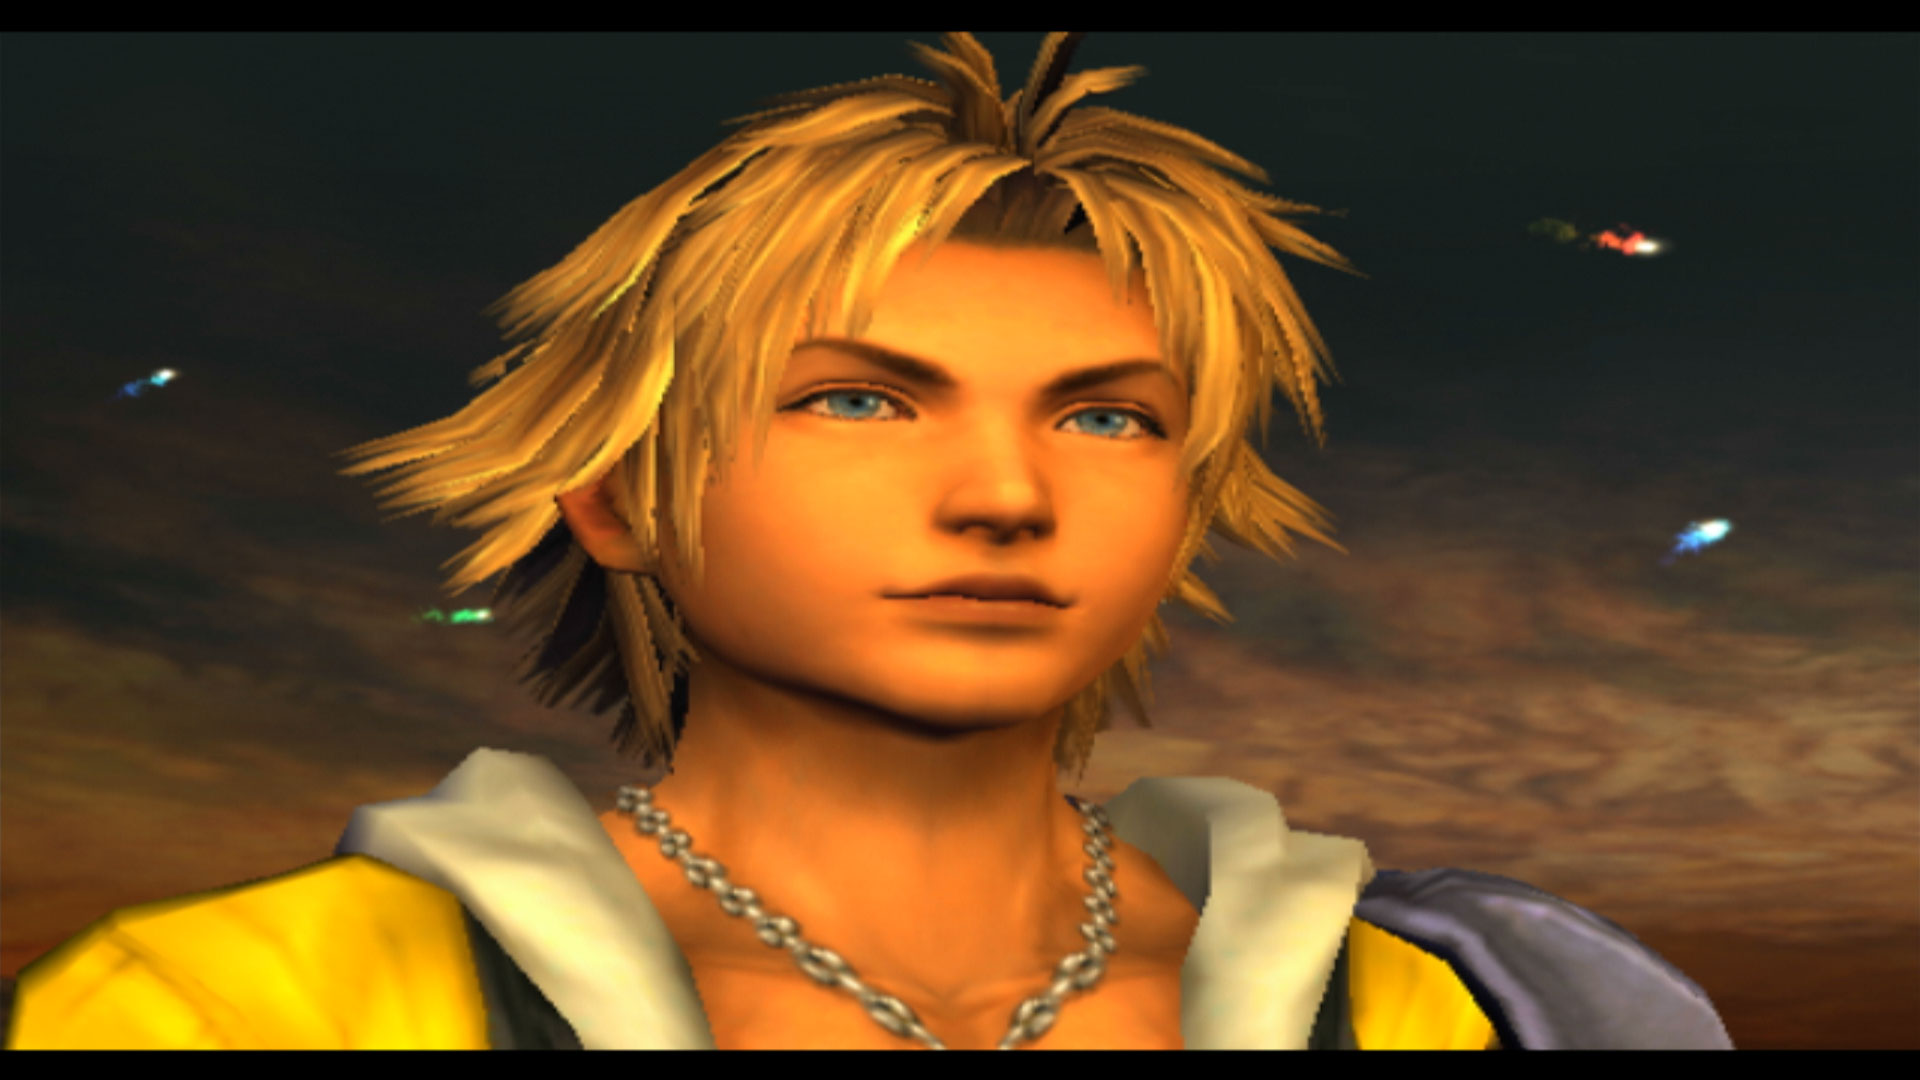 Final Fantasy X PS2 main character Tidus